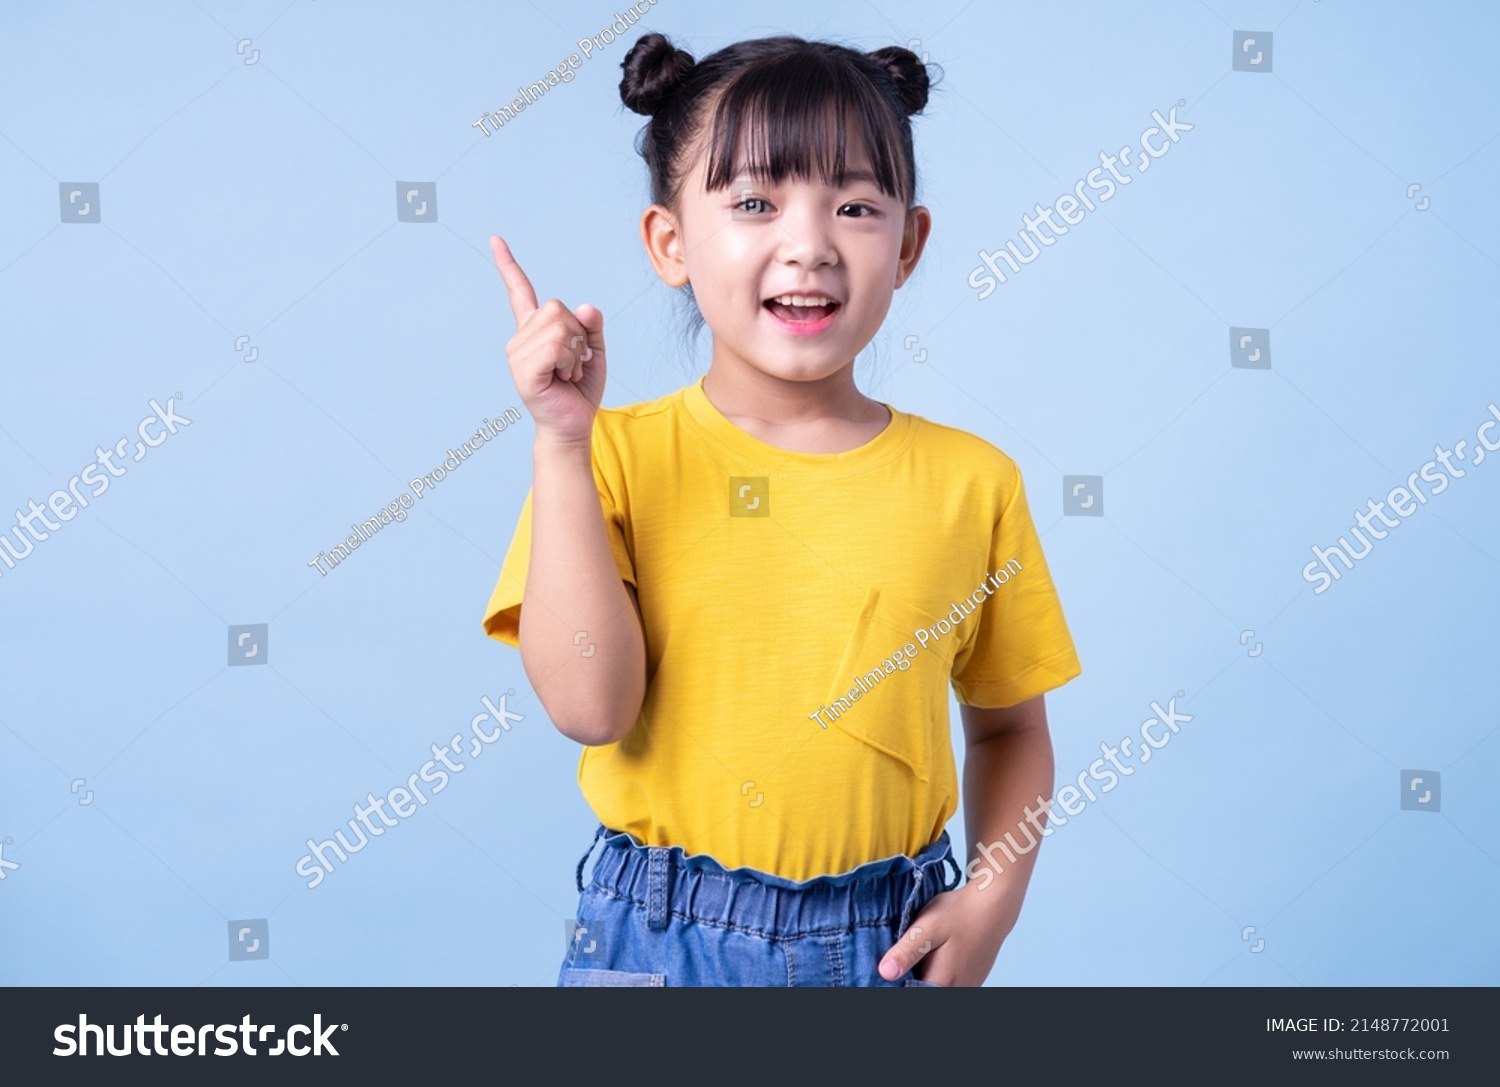 Image of Asian child posing on blue background #2148772001